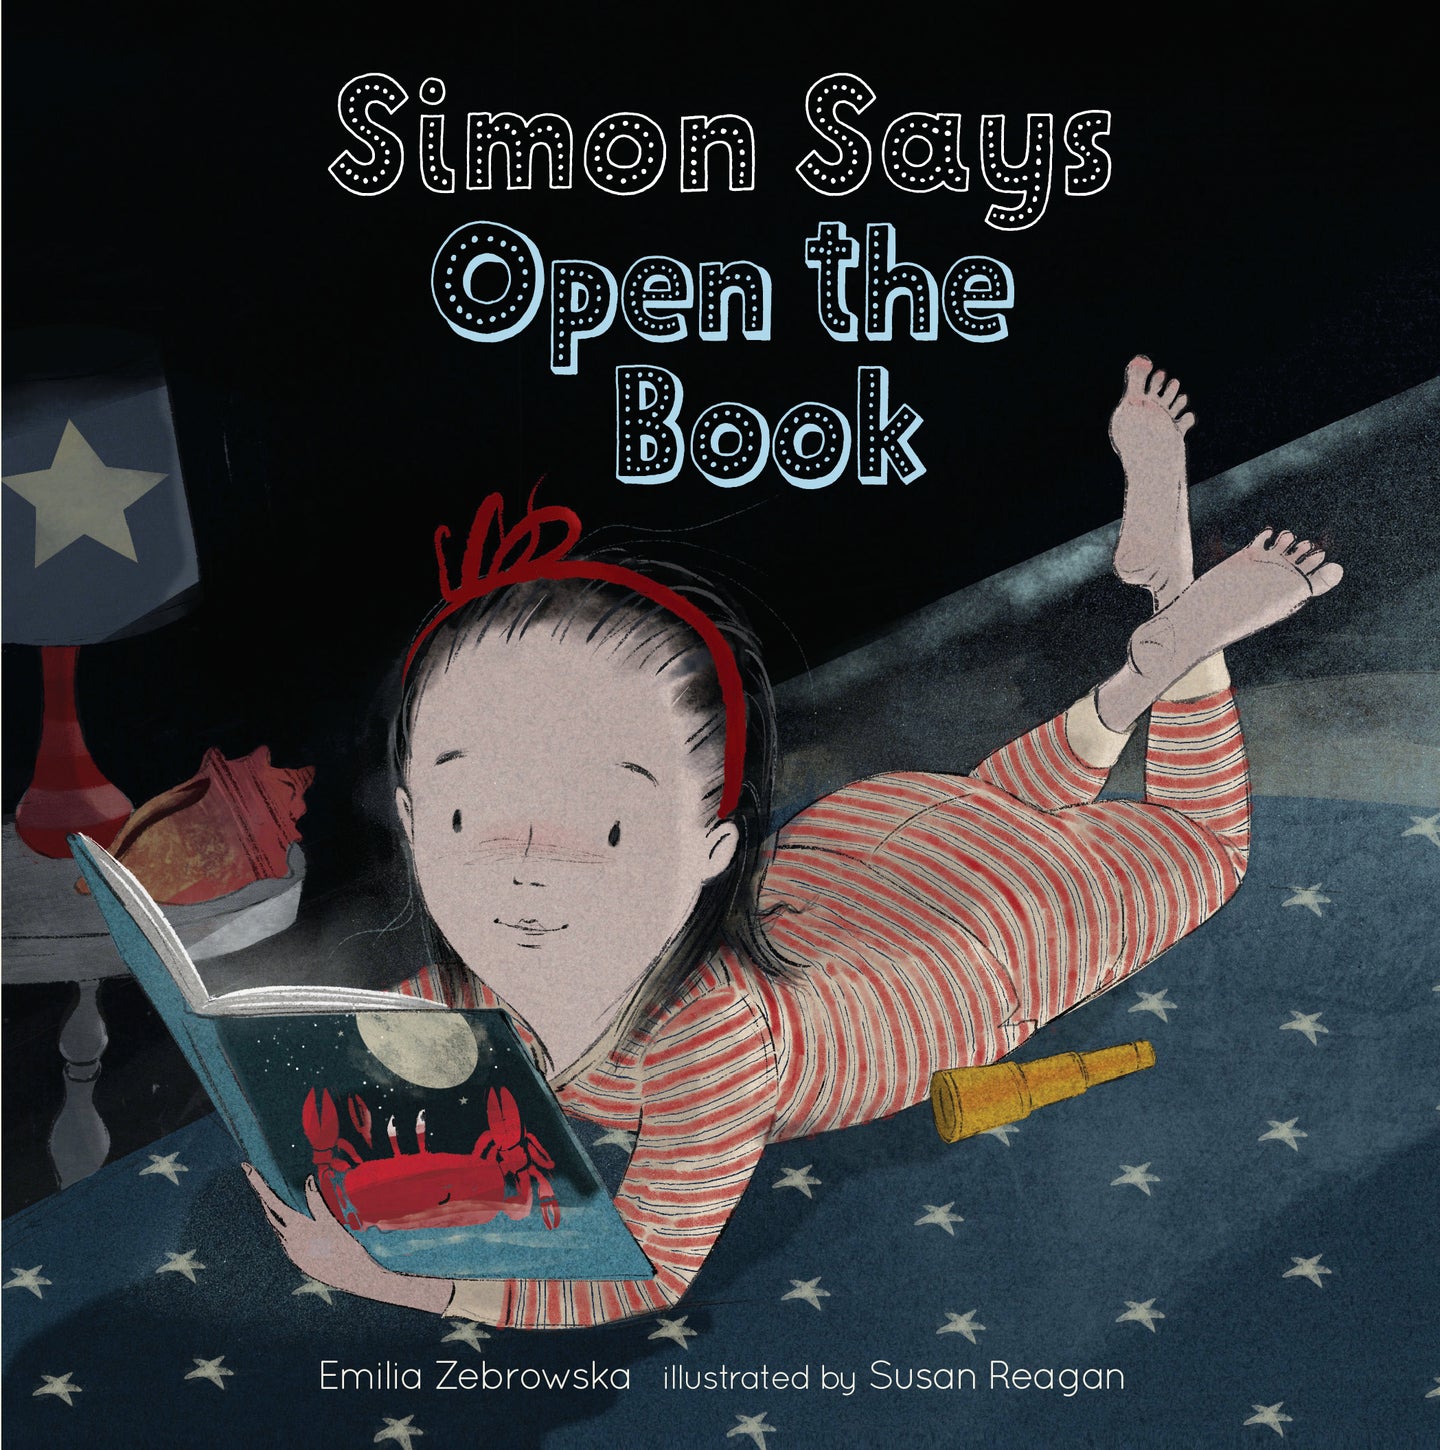 Simon Says Open the Book